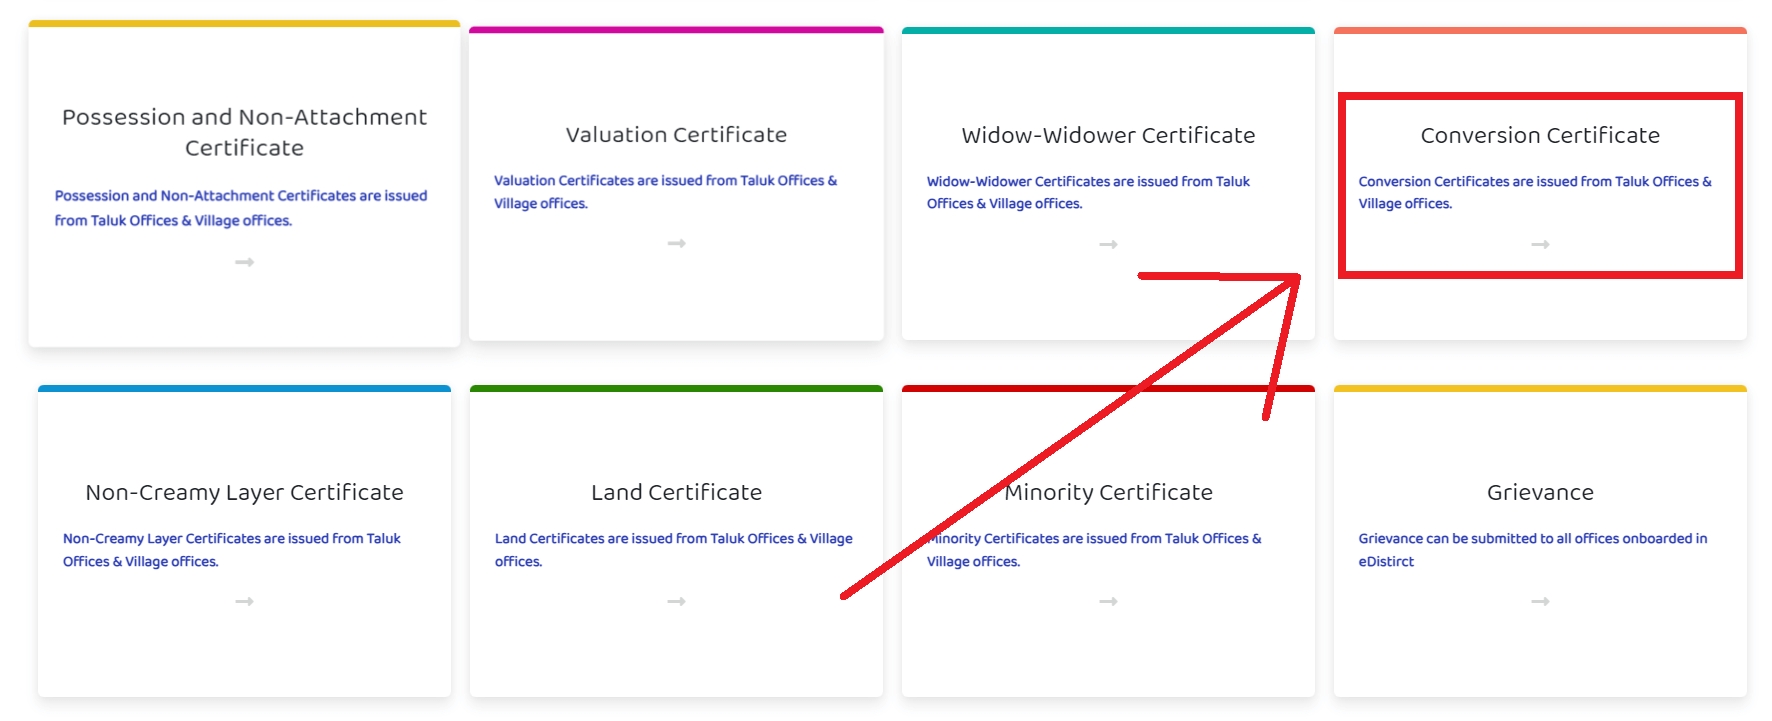 Conversion Certificate Kerala Online Application